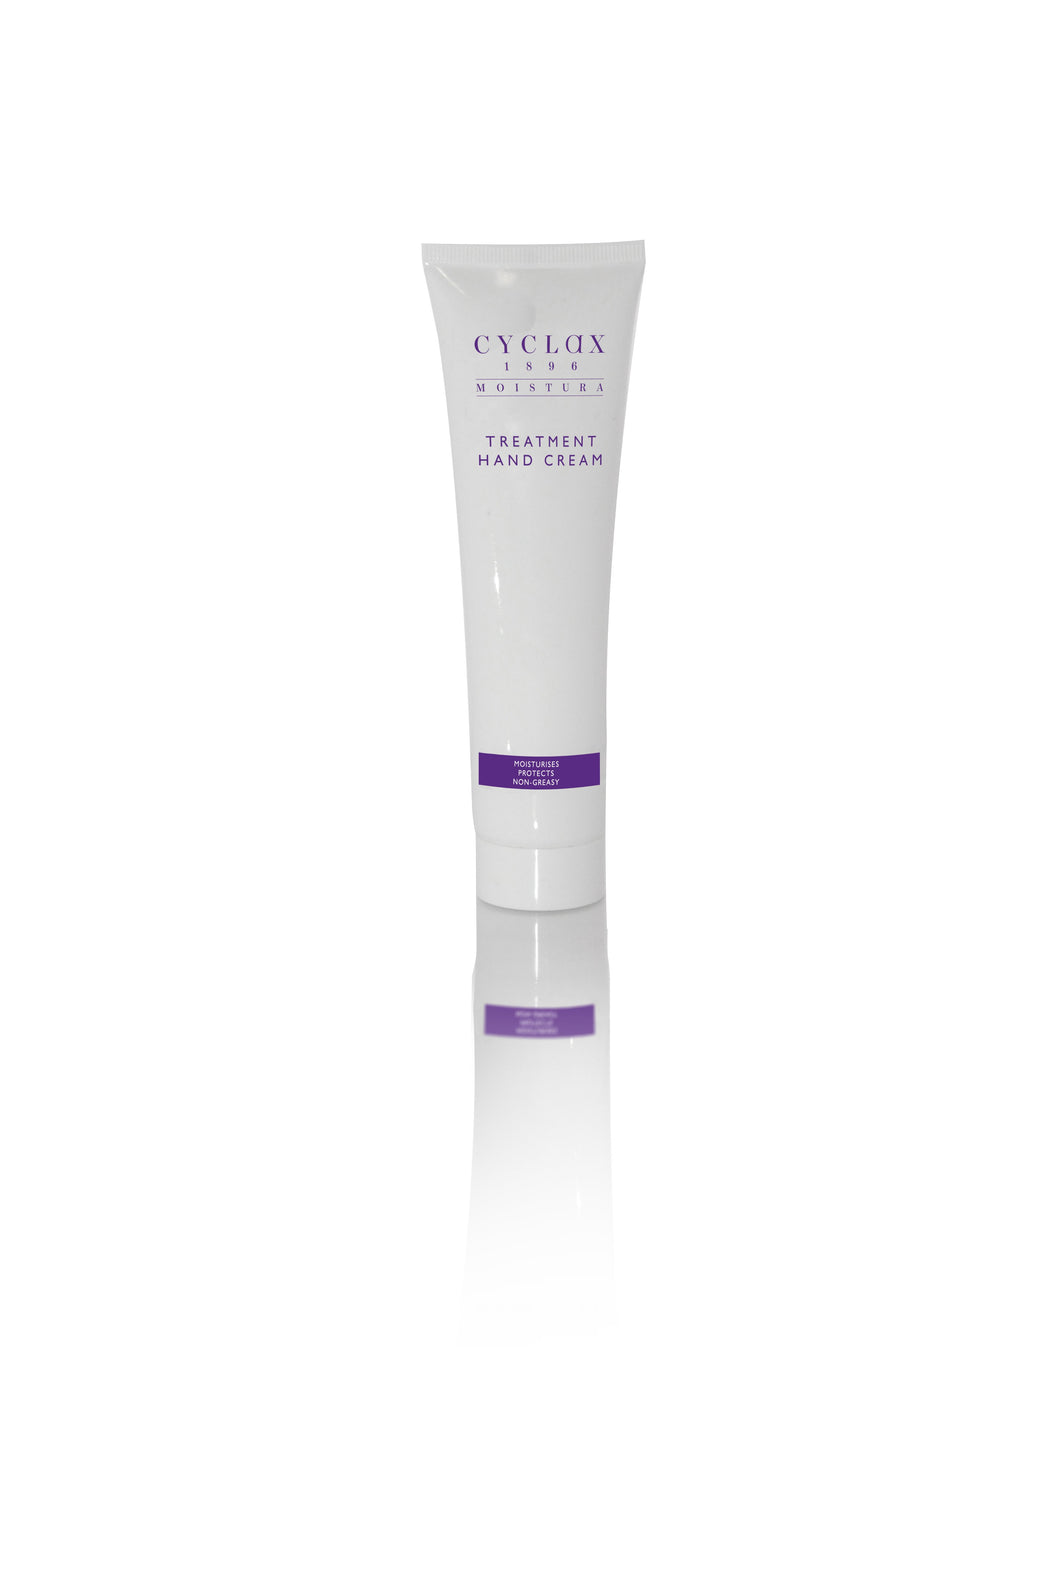 Cyclax Moistura Treatment Hand Cream 100ml